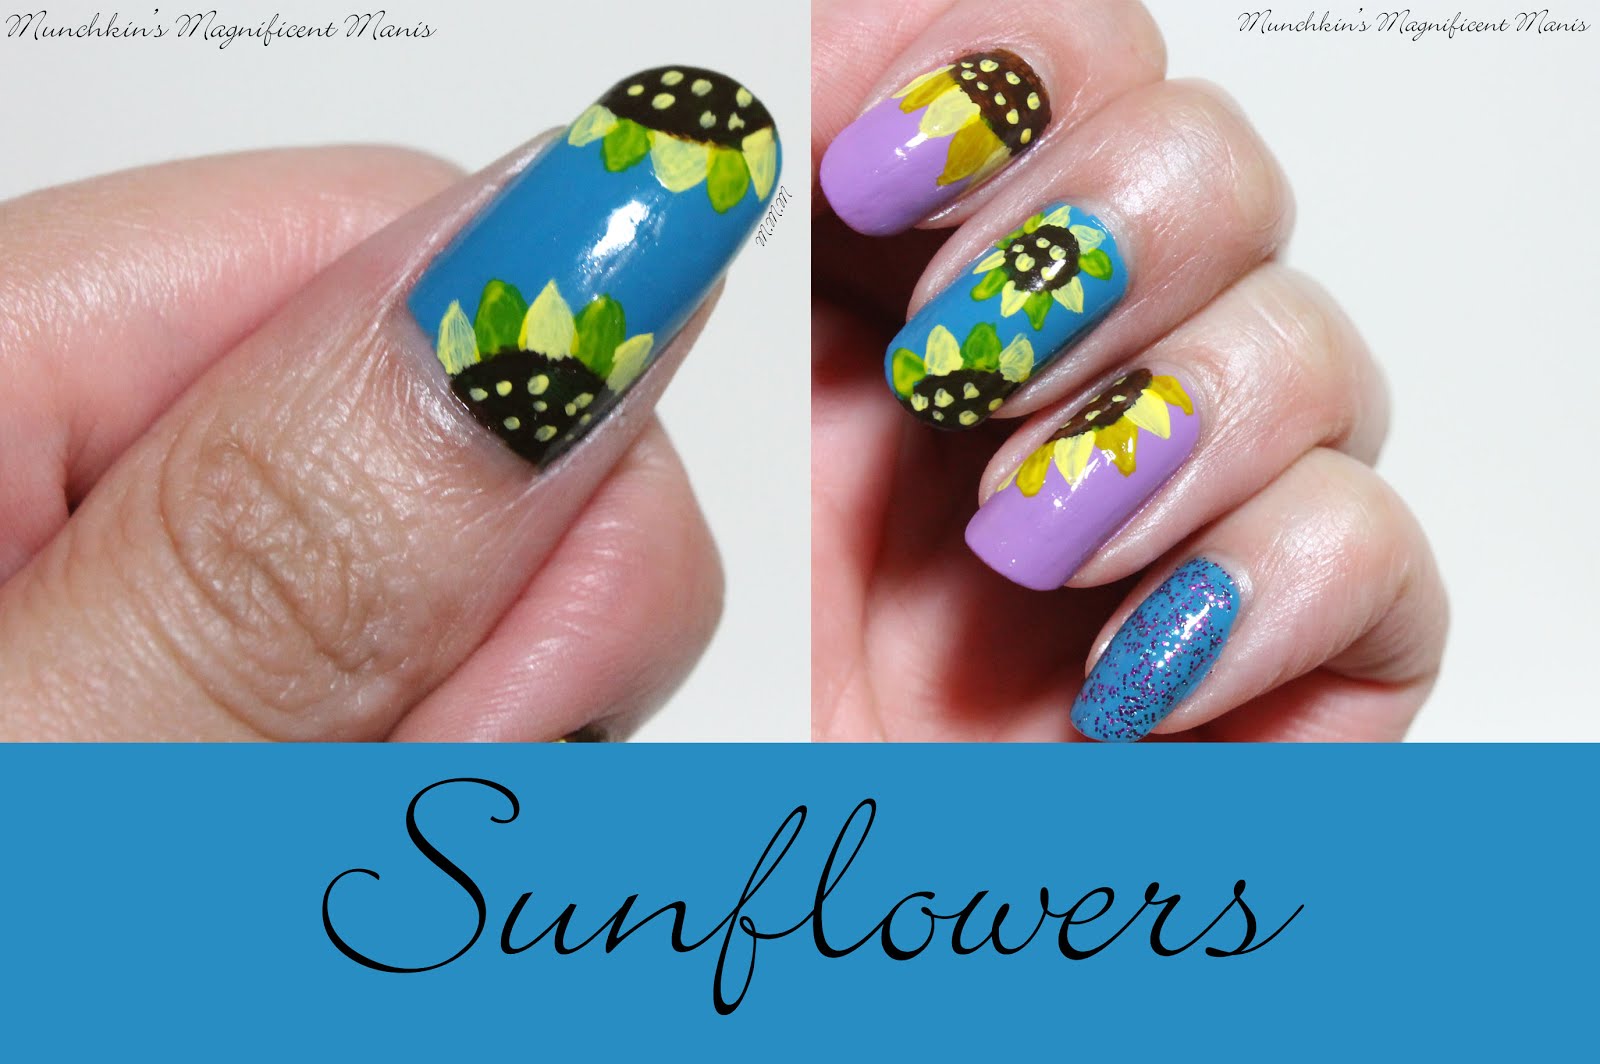 1. Sunflower Nail Design - wide 4